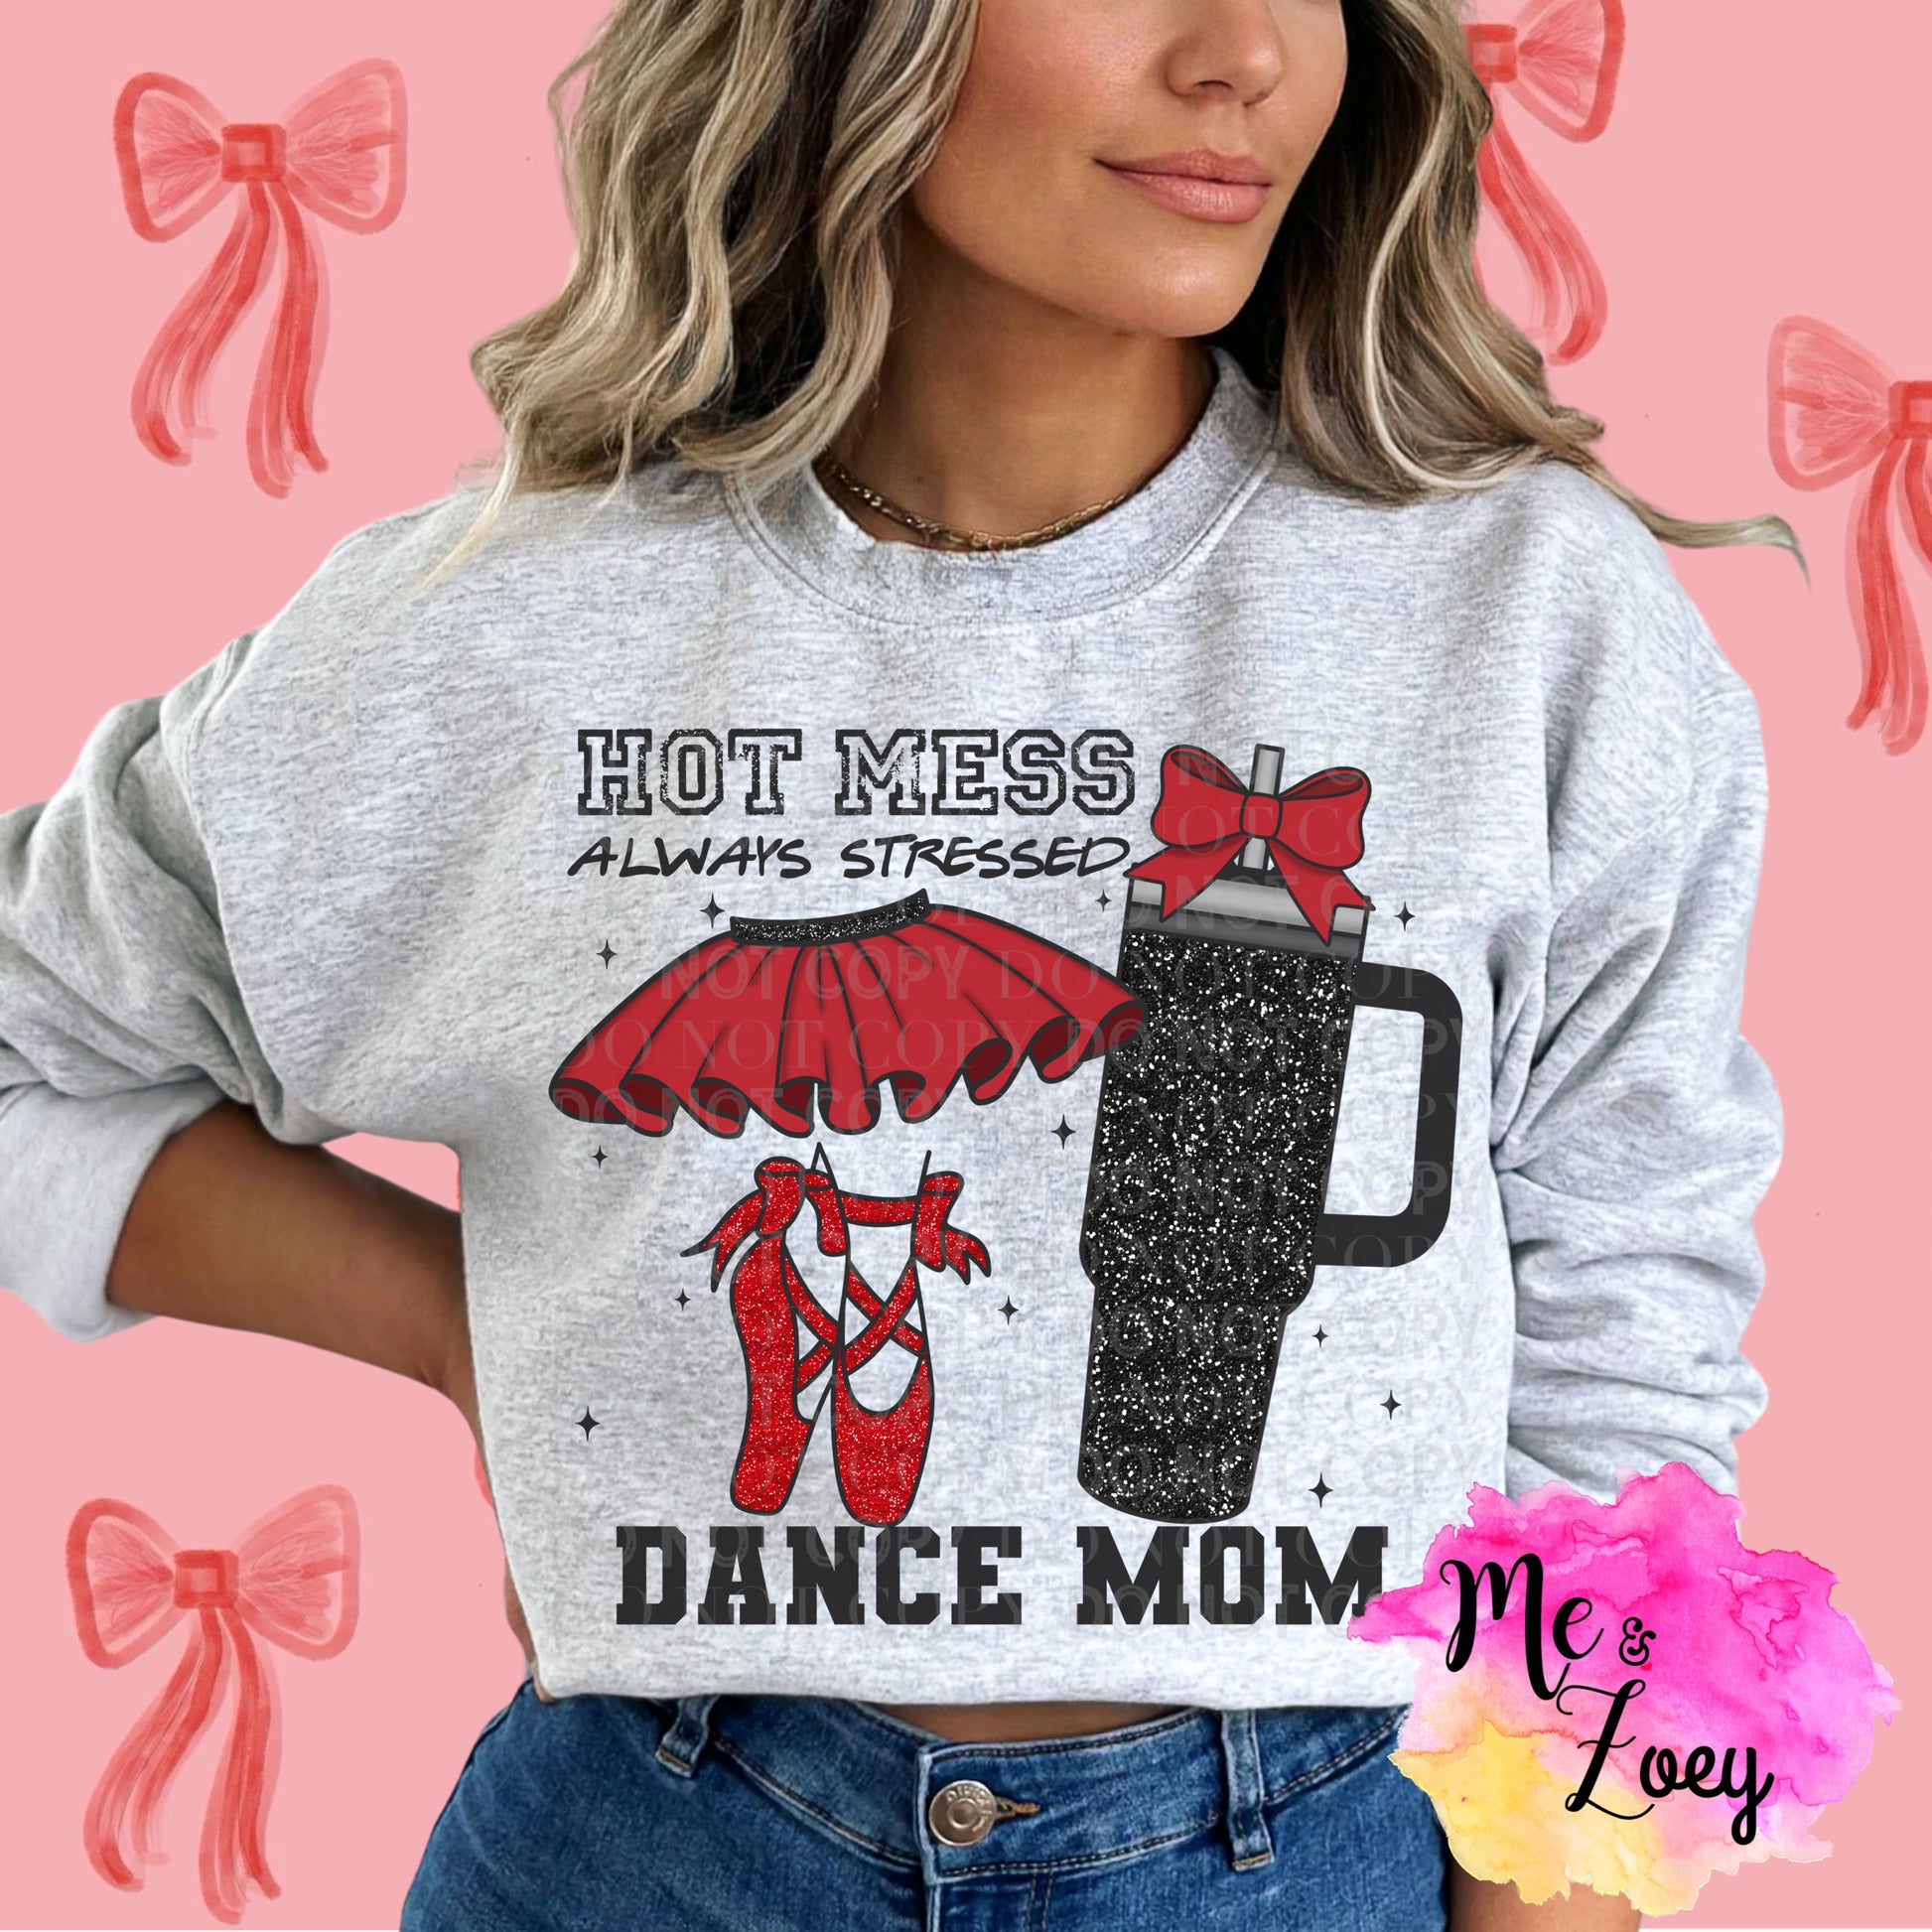 Dance Mom Graphic Sweatshirt - MeAndZoey